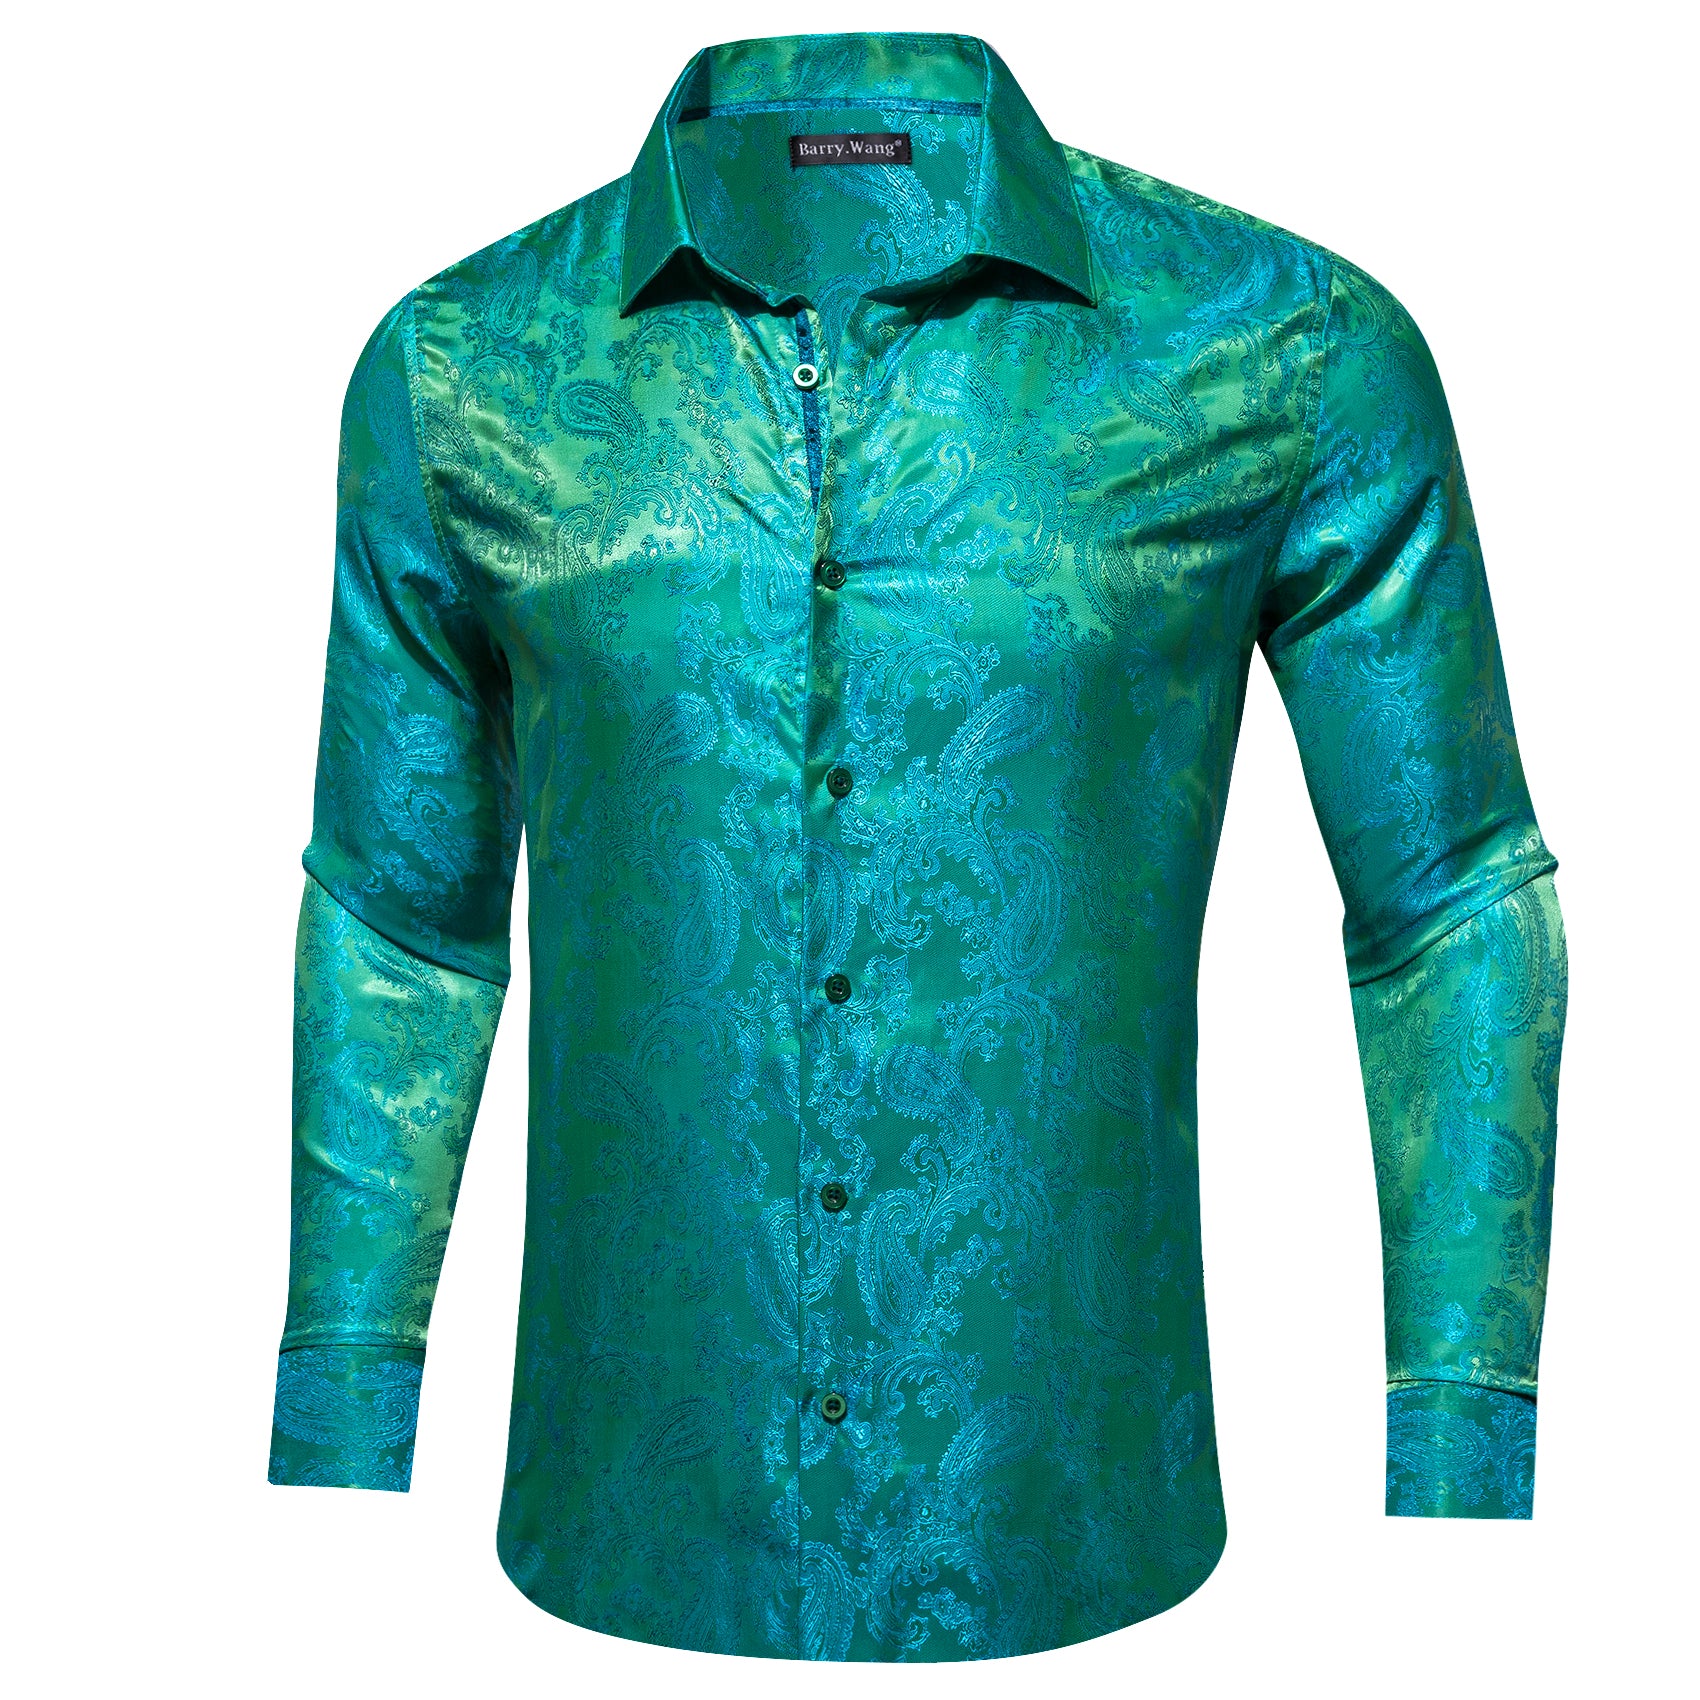 Barry.wang Bright Green Blue Paisley Silk Men's Shirt